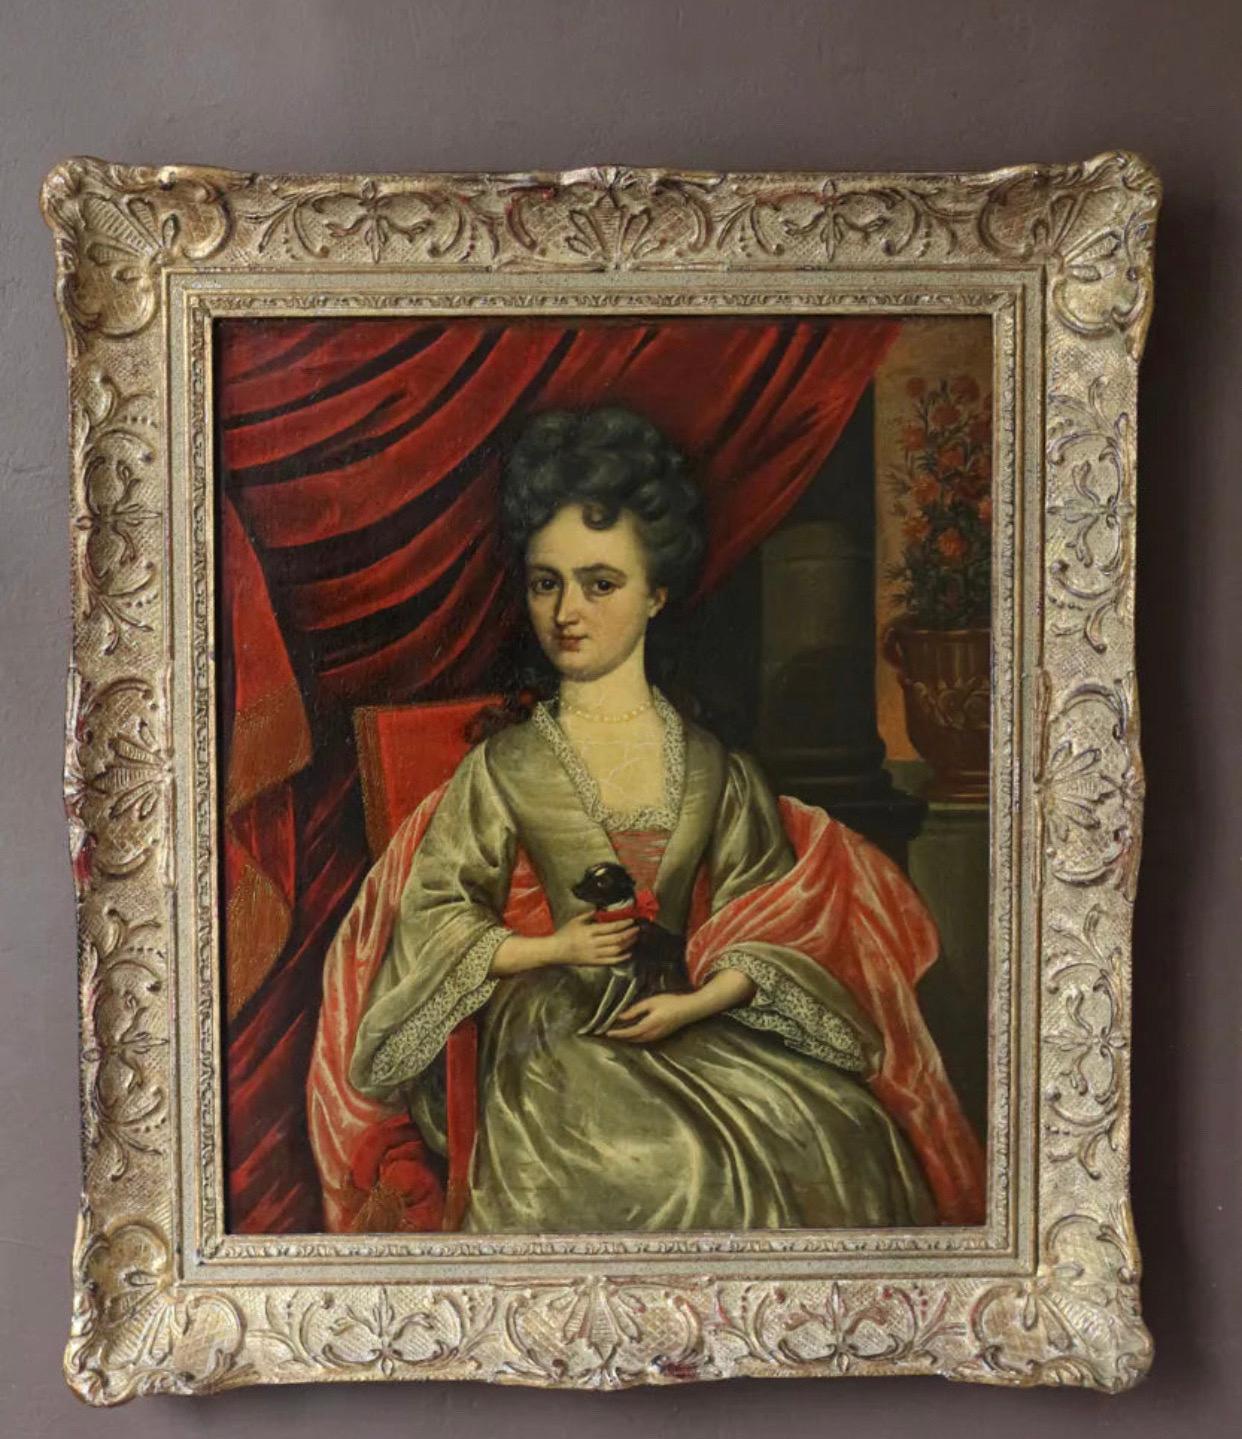 Unglaubliches Porträt der Madame de Graffigny im Pariser Realismus der frühen 1800er Jahre. Maße 65 x 53.
Françoise de Graffigny, Autorin des berühmten Romans 